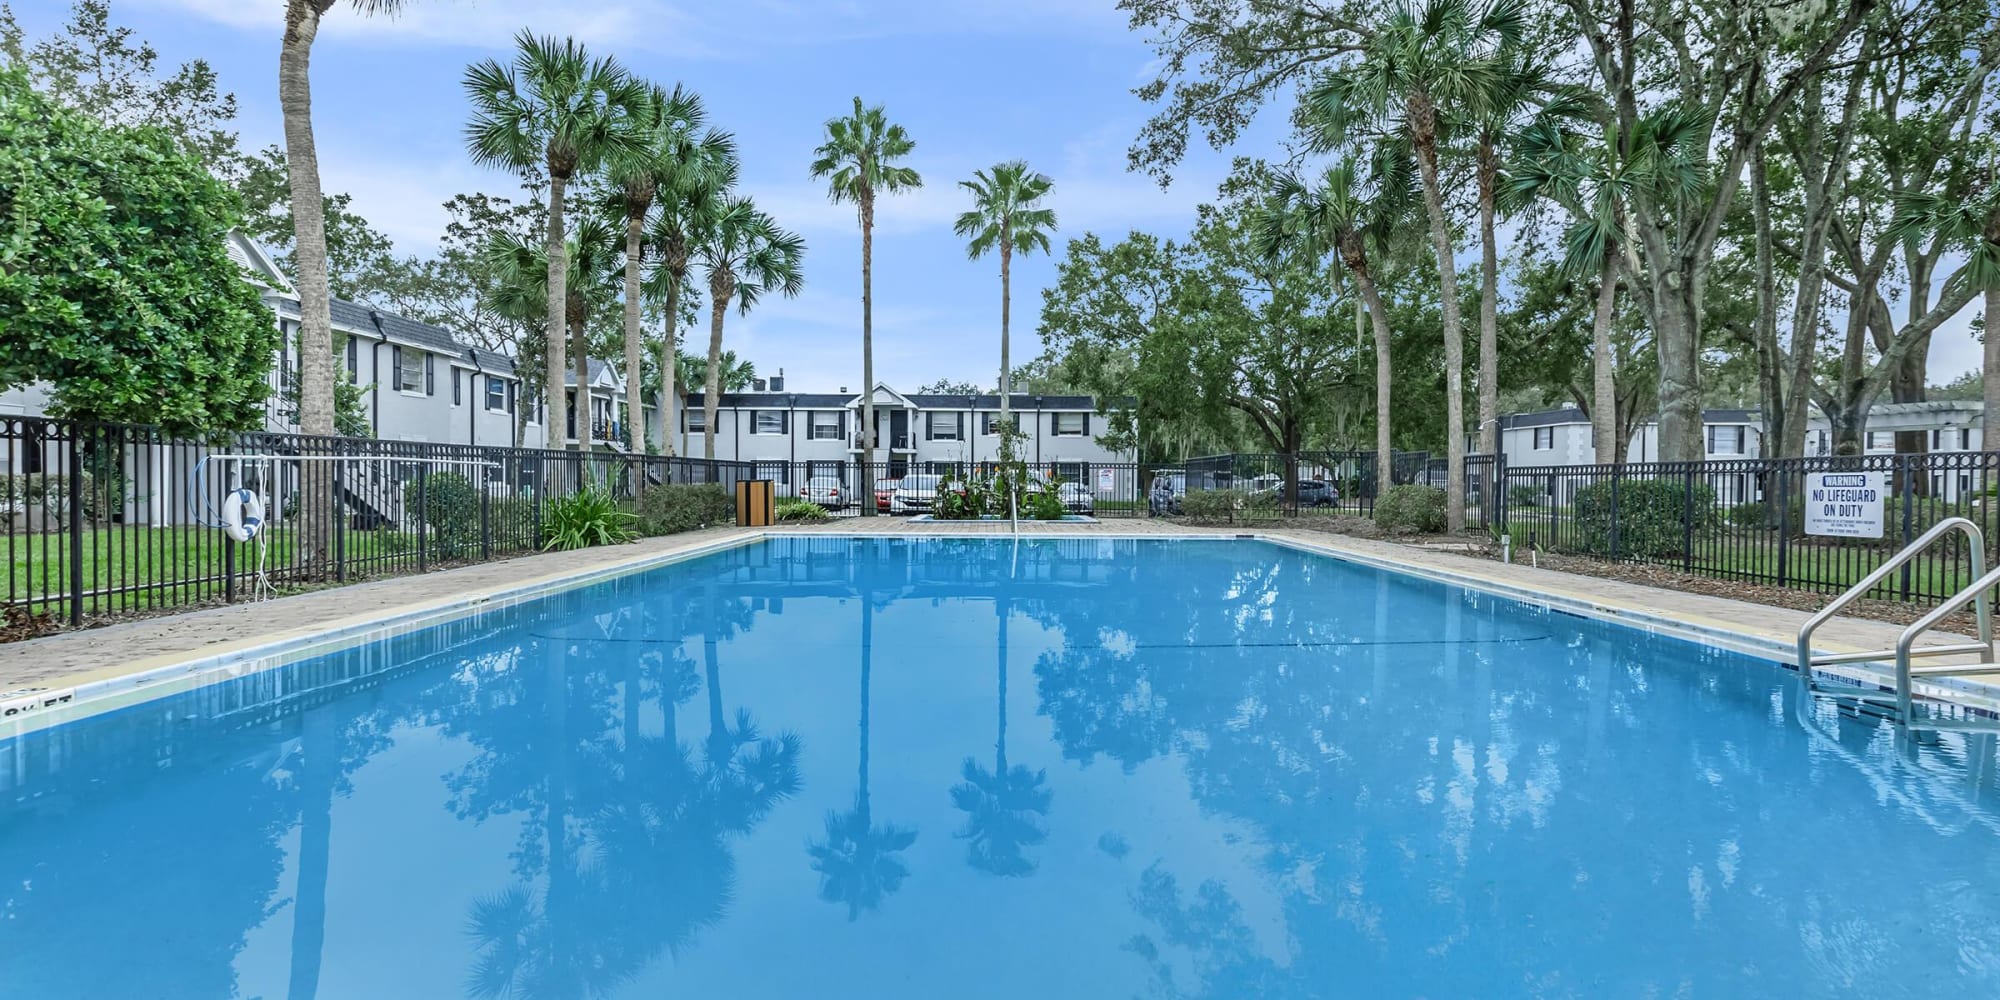 Large swimming pool at Magnolia Court in Orlando, Florida